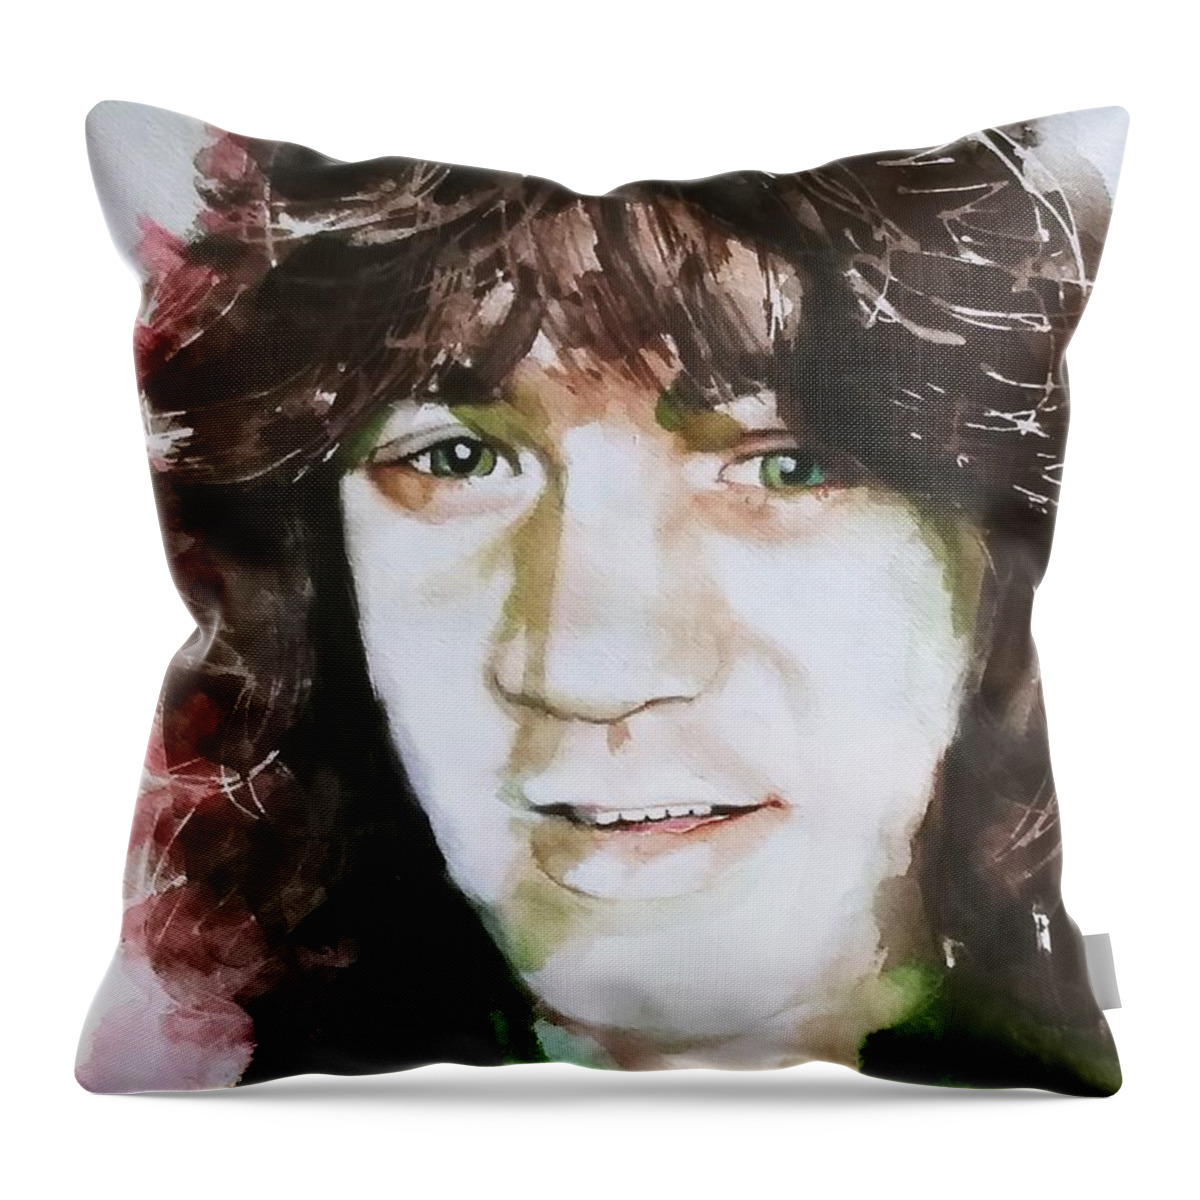 Watercolor Throw Pillow featuring the painting Tribute to Eddie Van Halen 2 by Chrisann Ellis